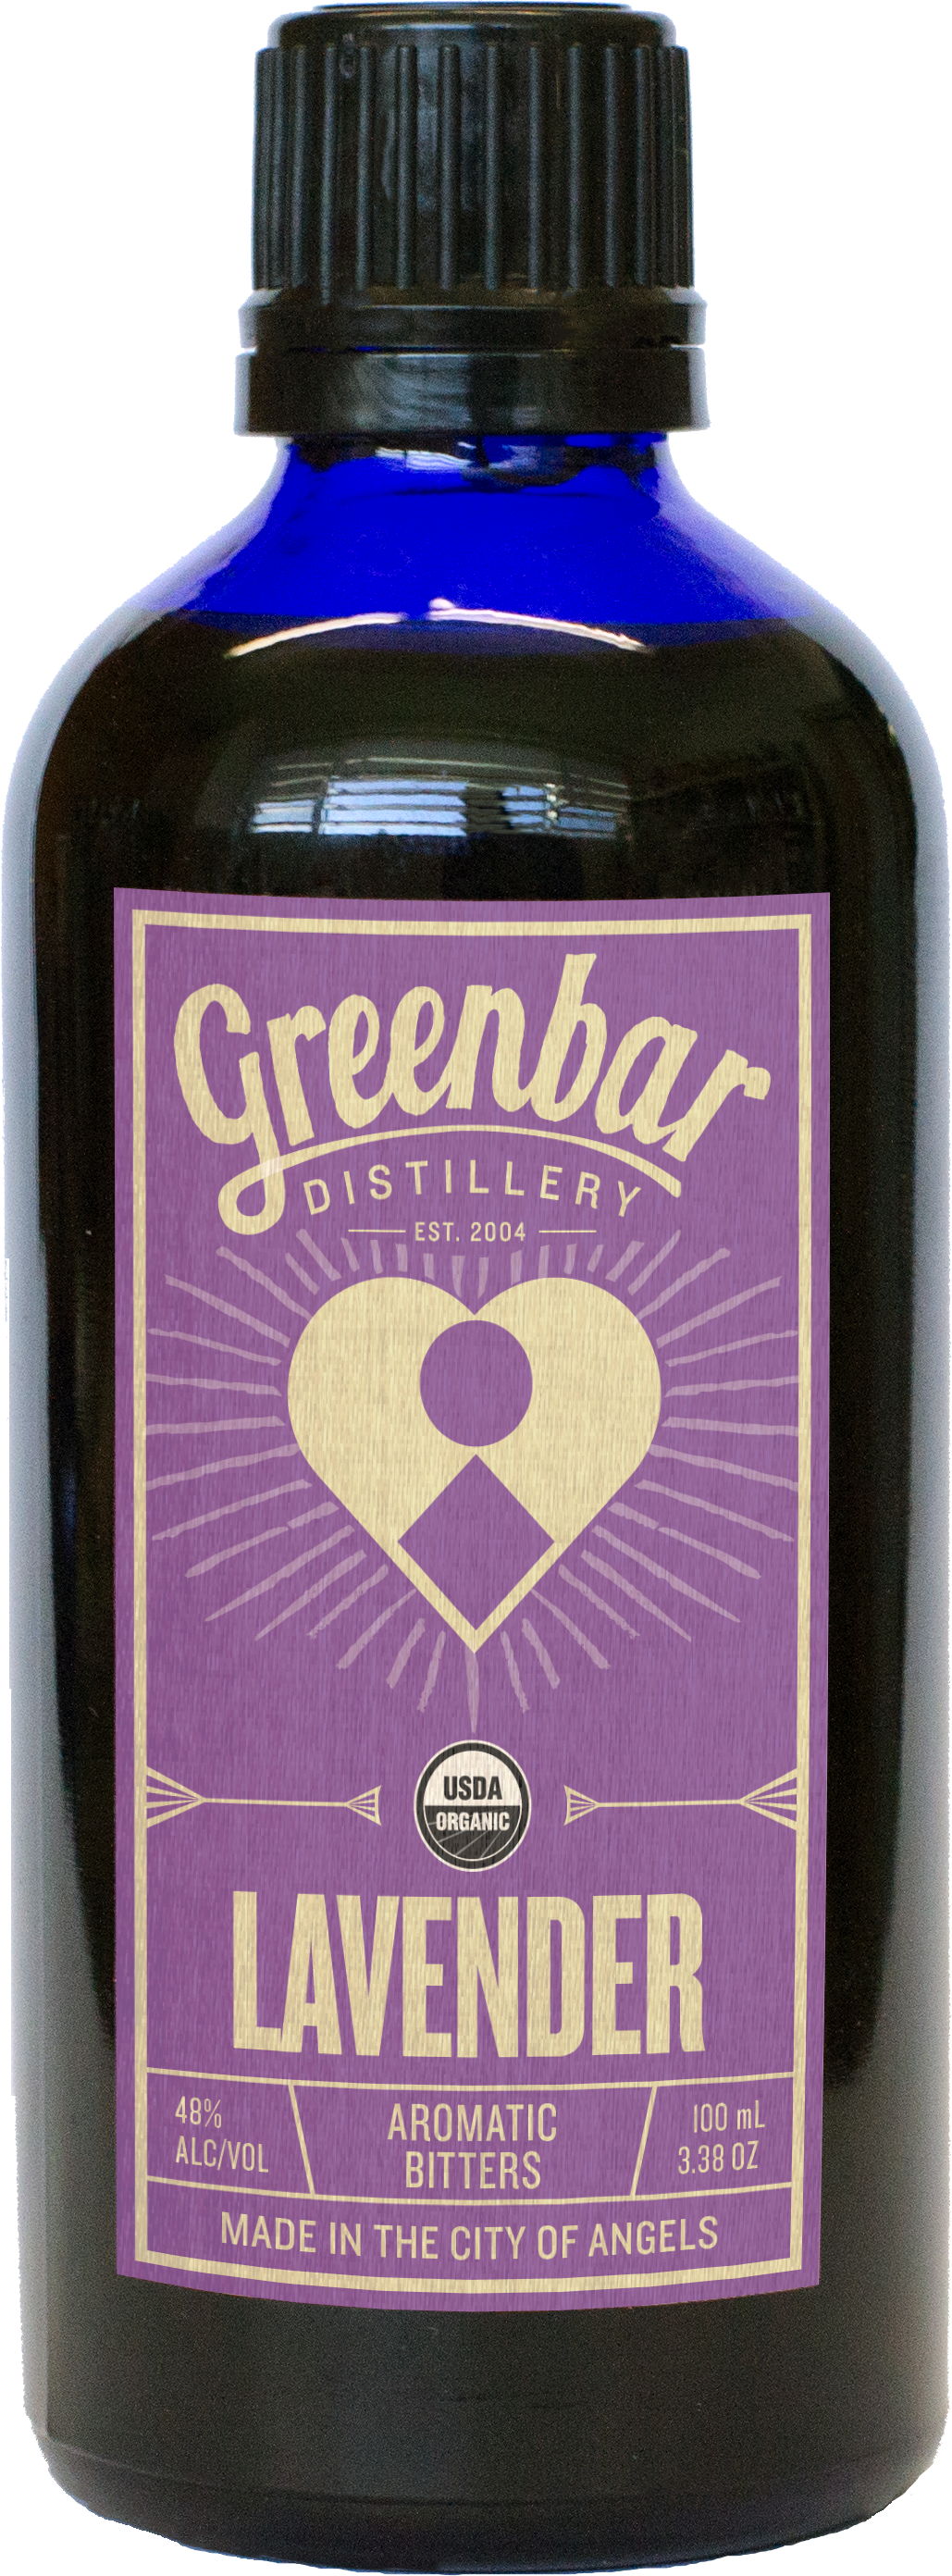 Greenbar Distillery Lavender bitters